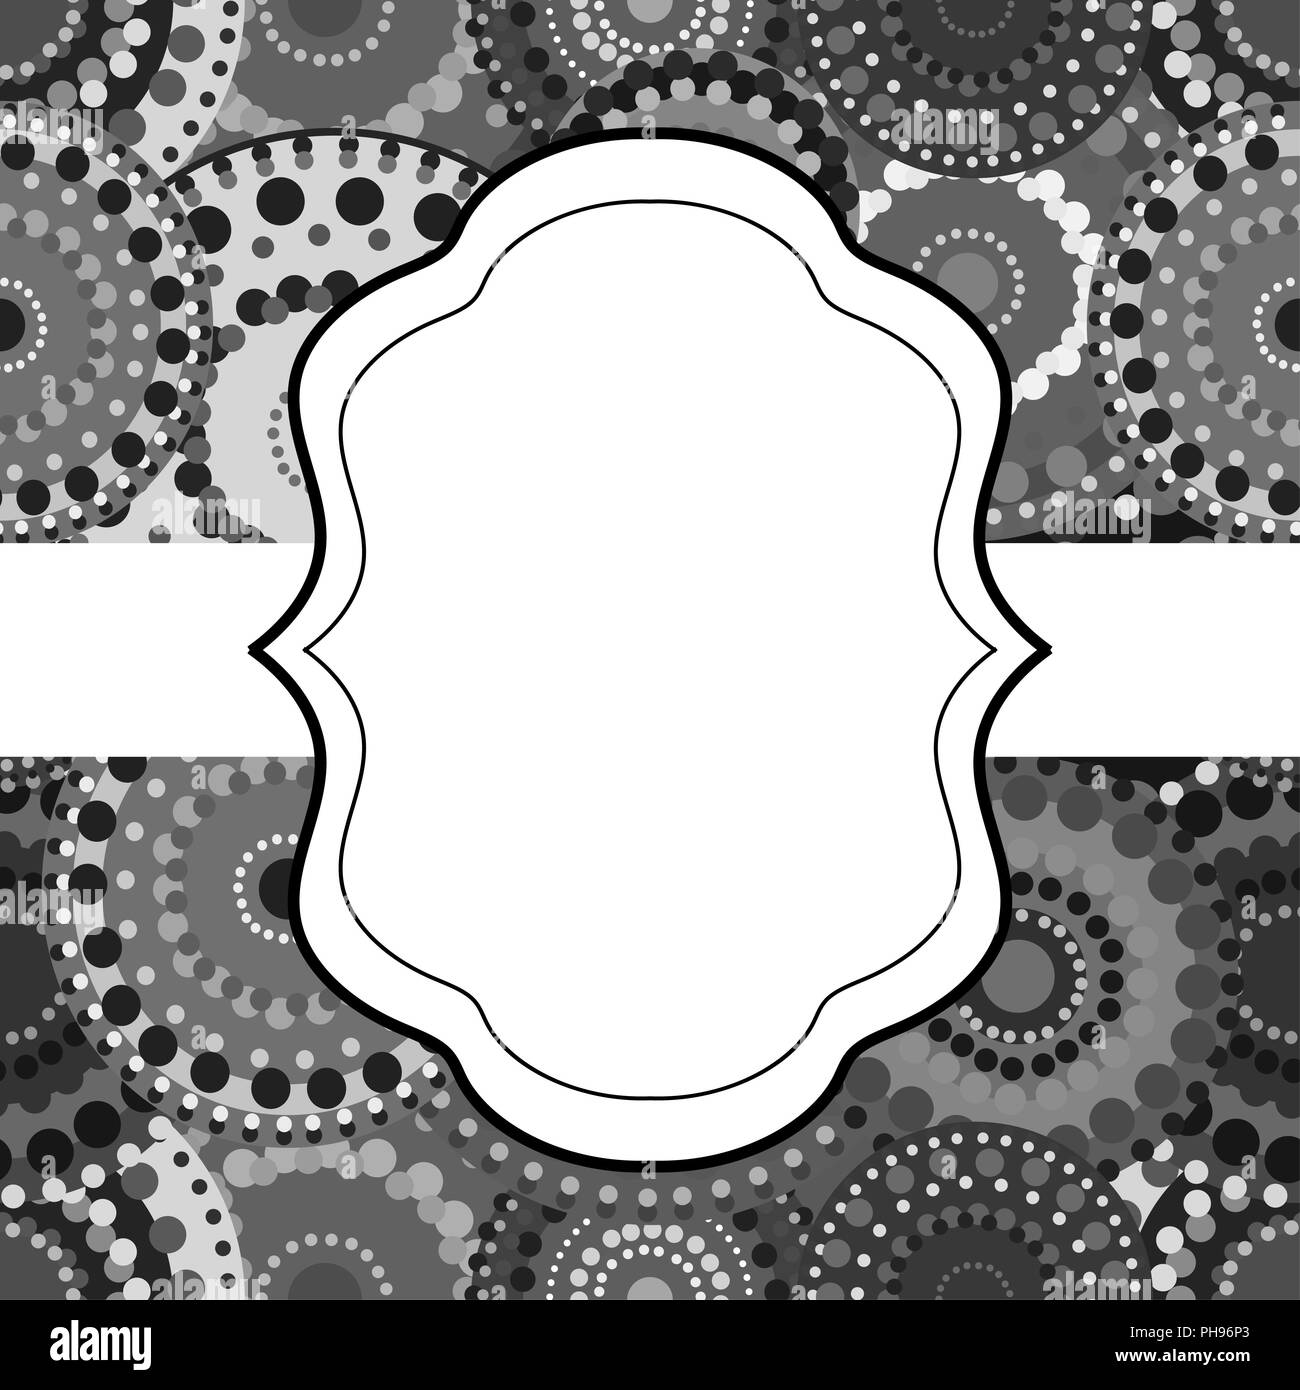 Patterned frame background invitation circular ornament grey bla Stock Photo